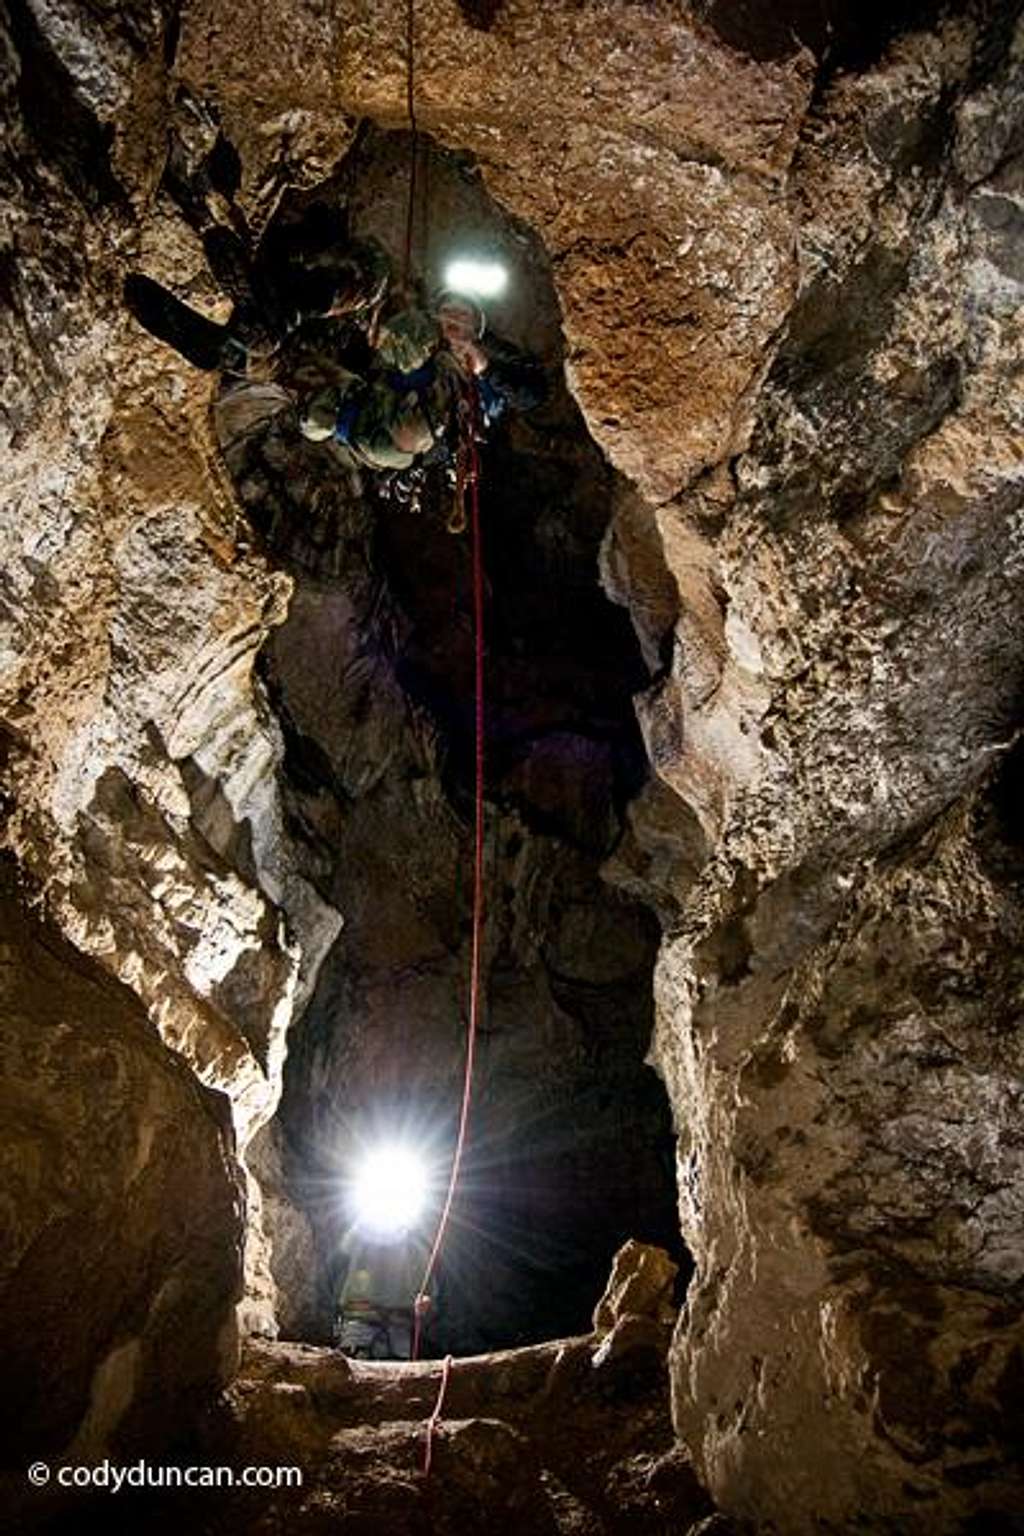 Windloch Sackdilling Cave